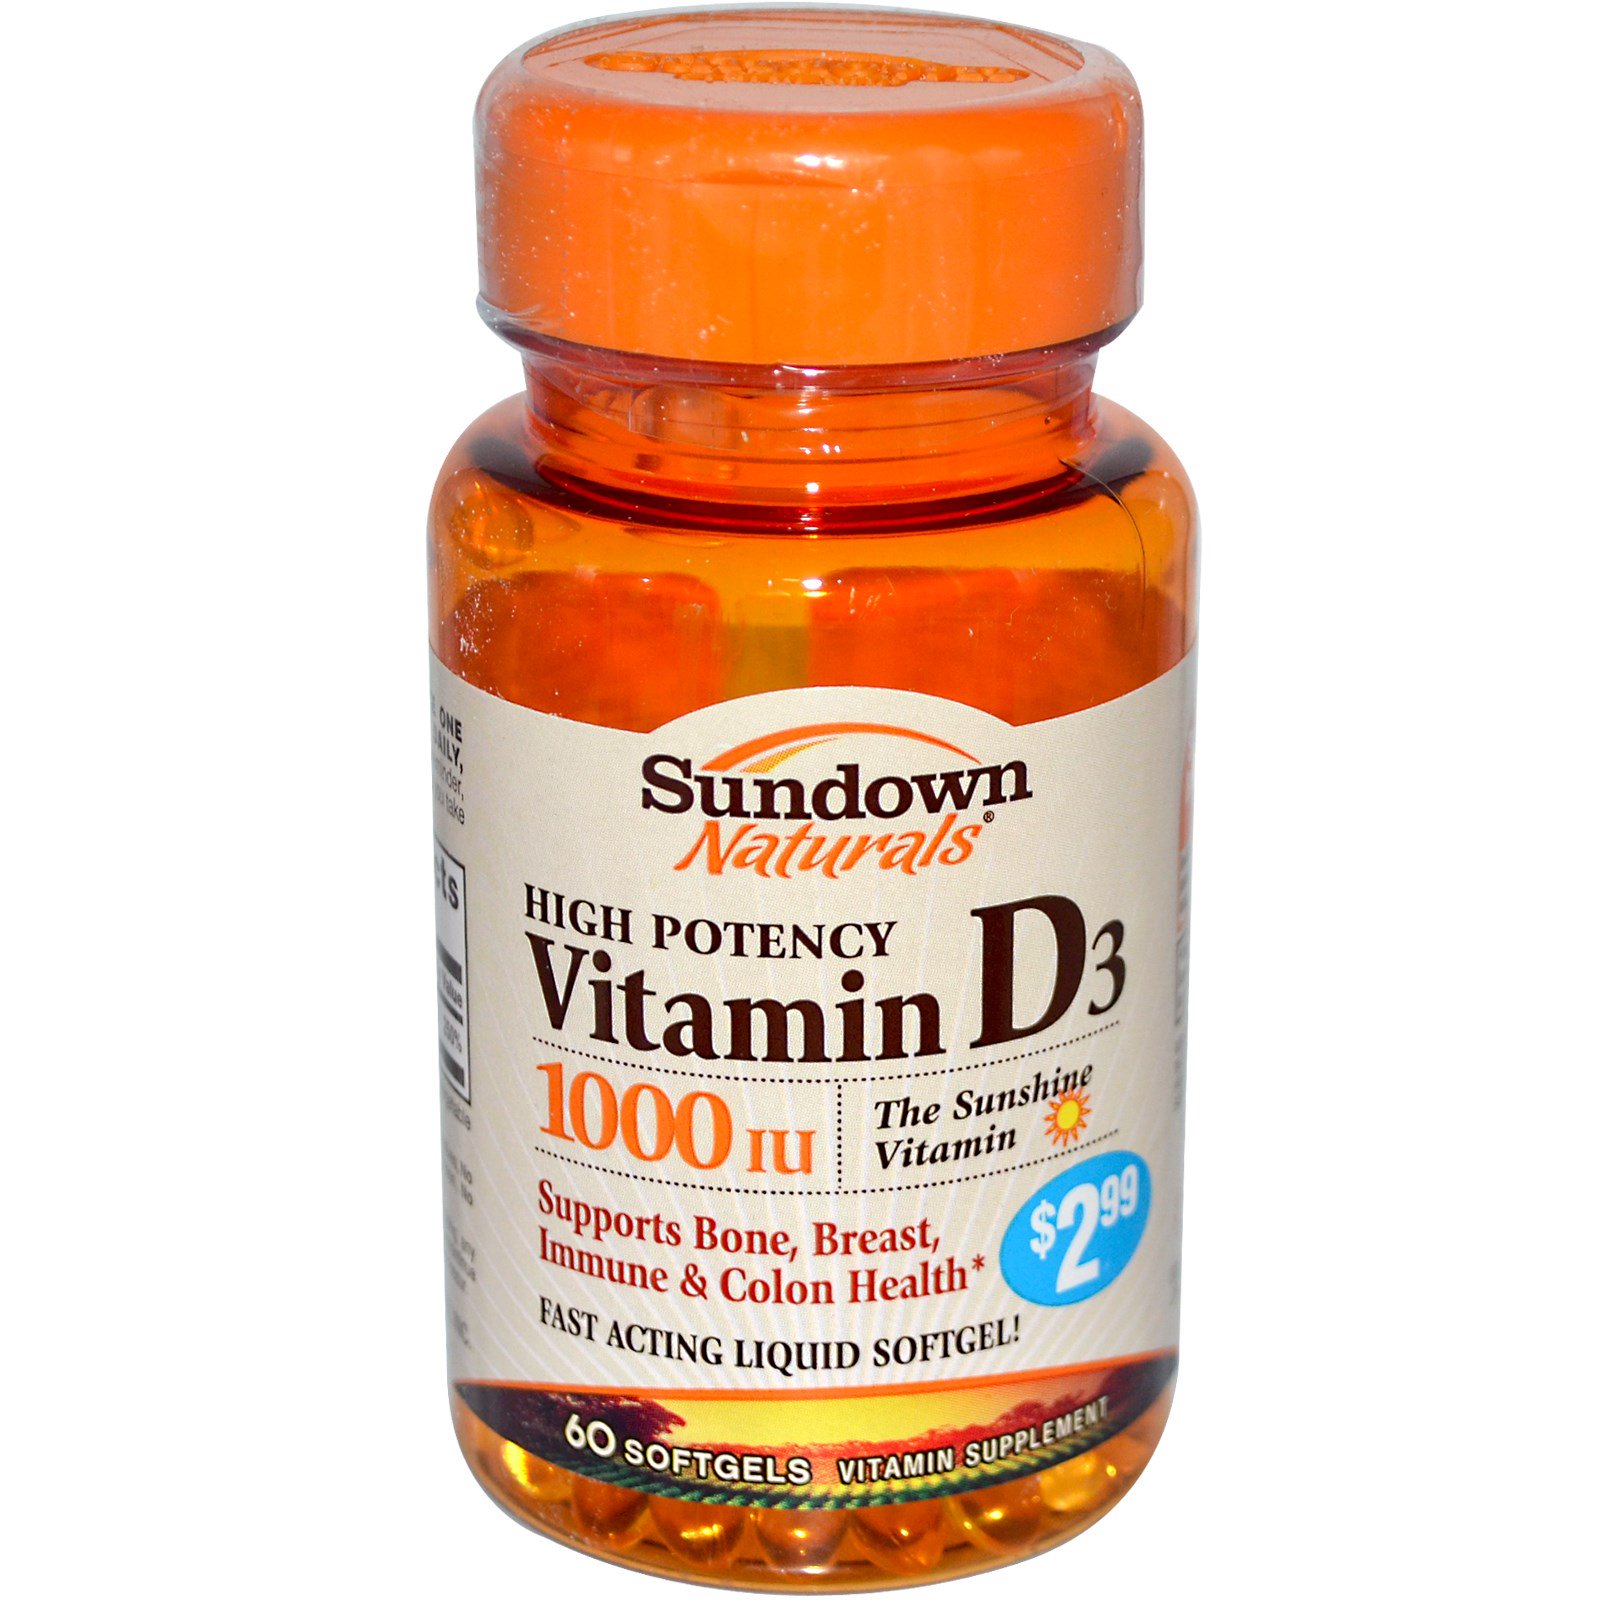 Sundown Naturals High Potency Vitamin D3 1000 Iu 60